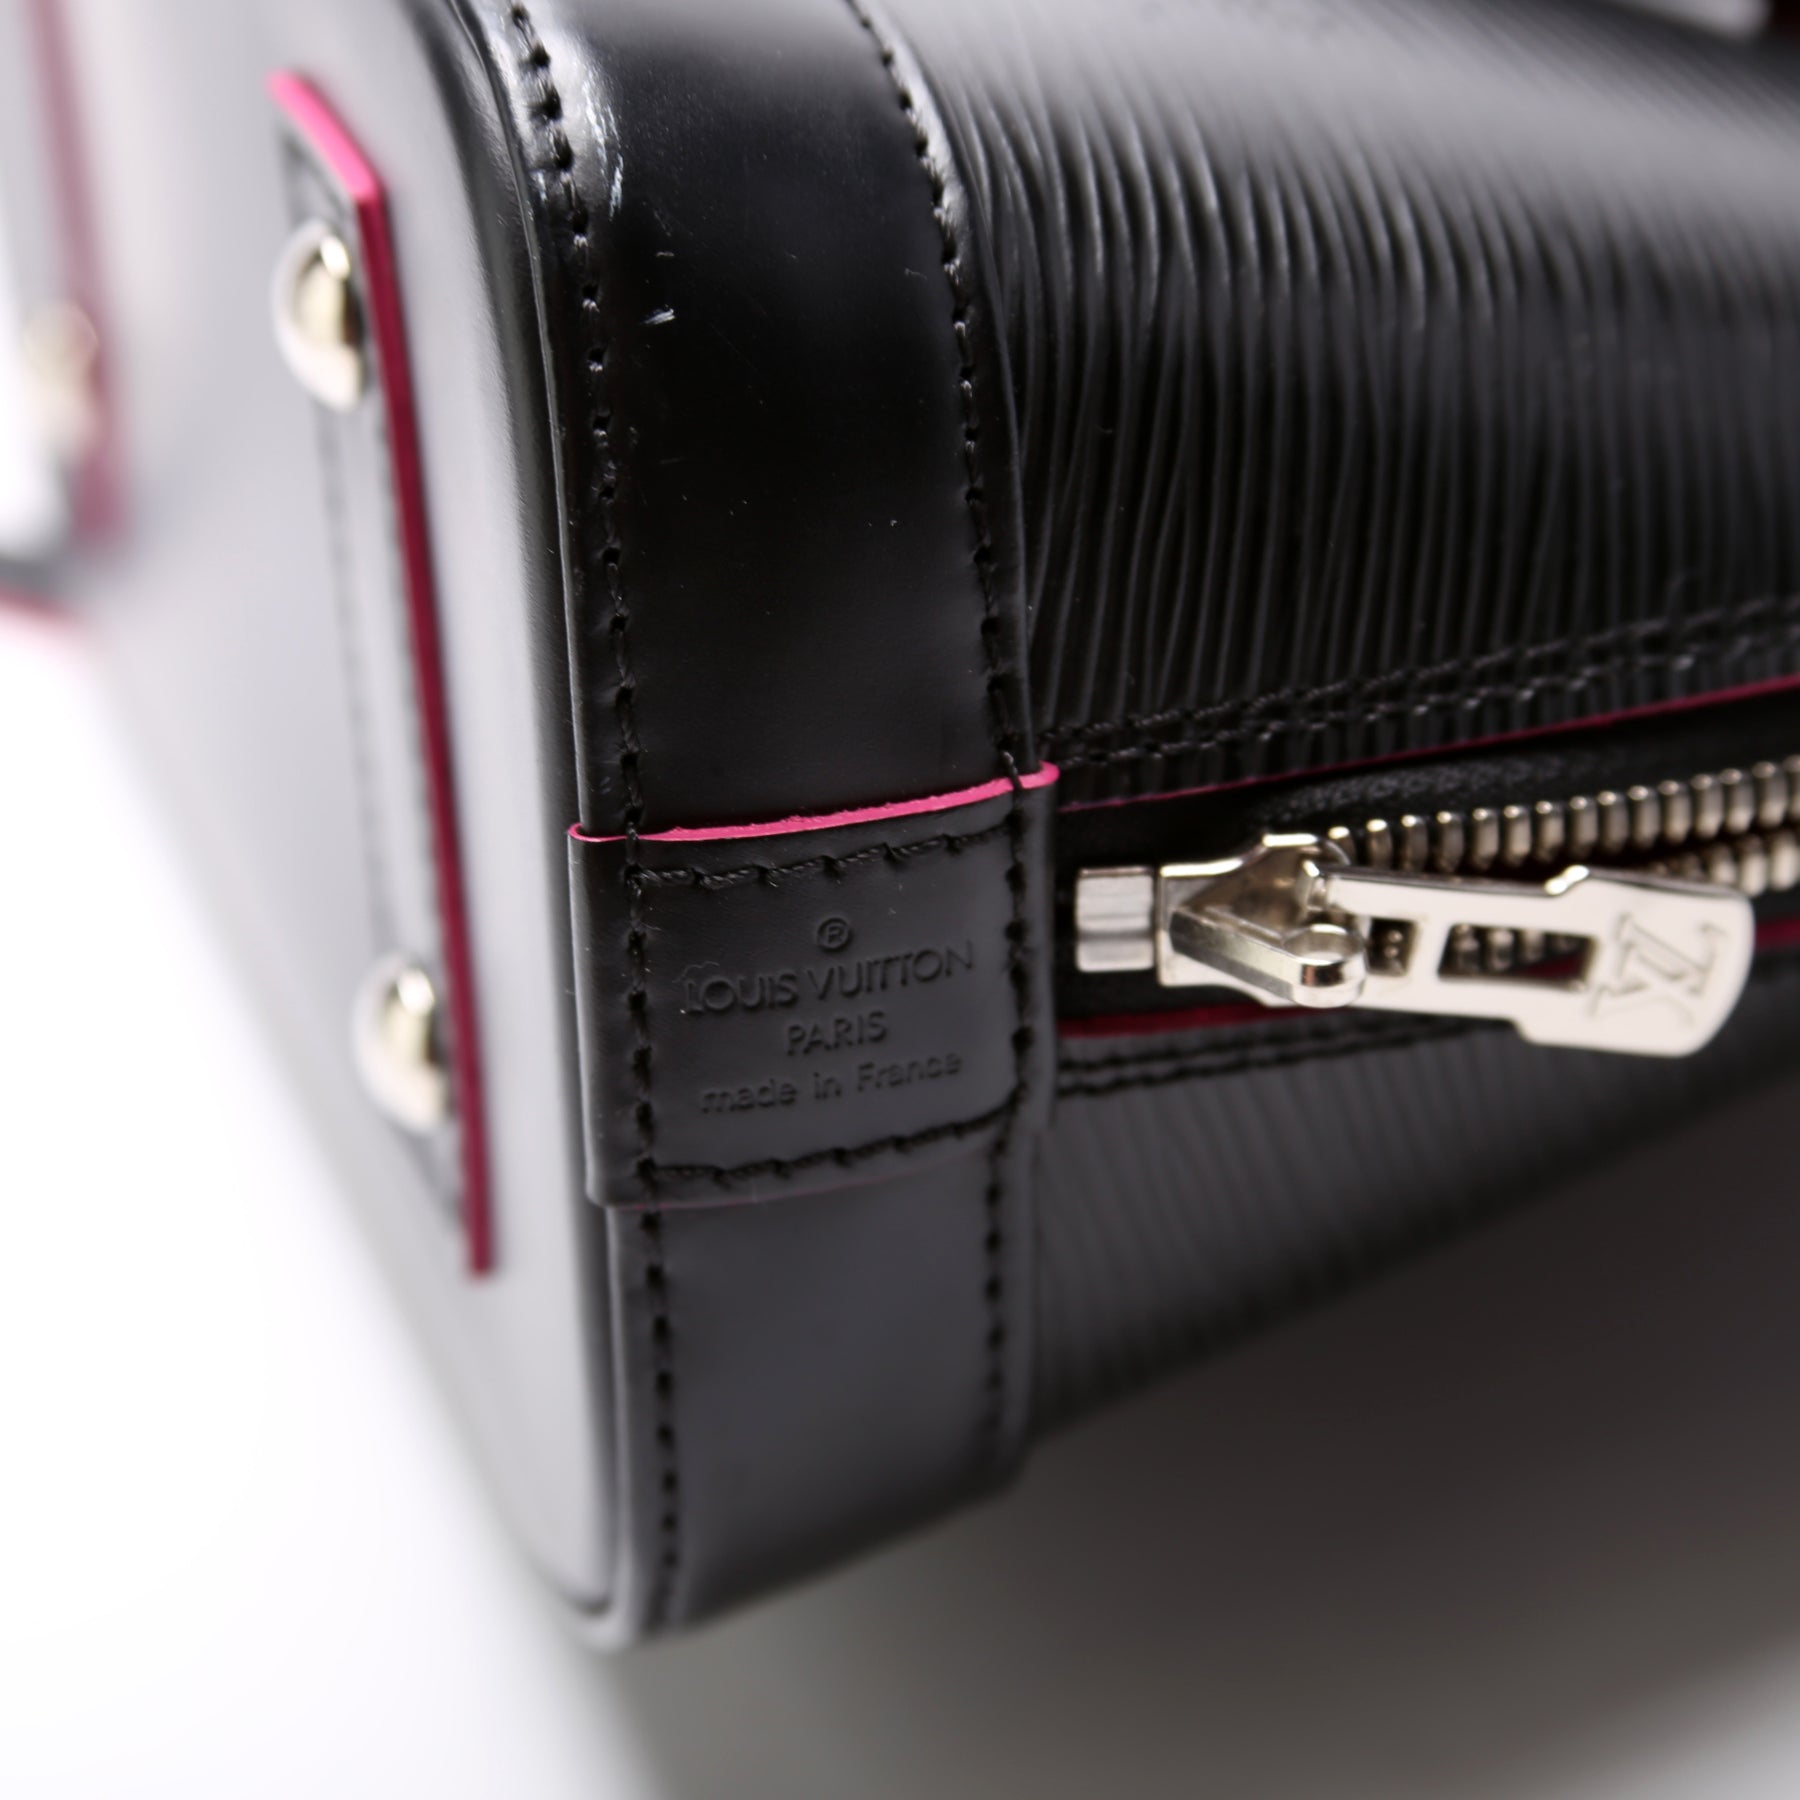 Alma BB Epi Stripes – Keeks Designer Handbags